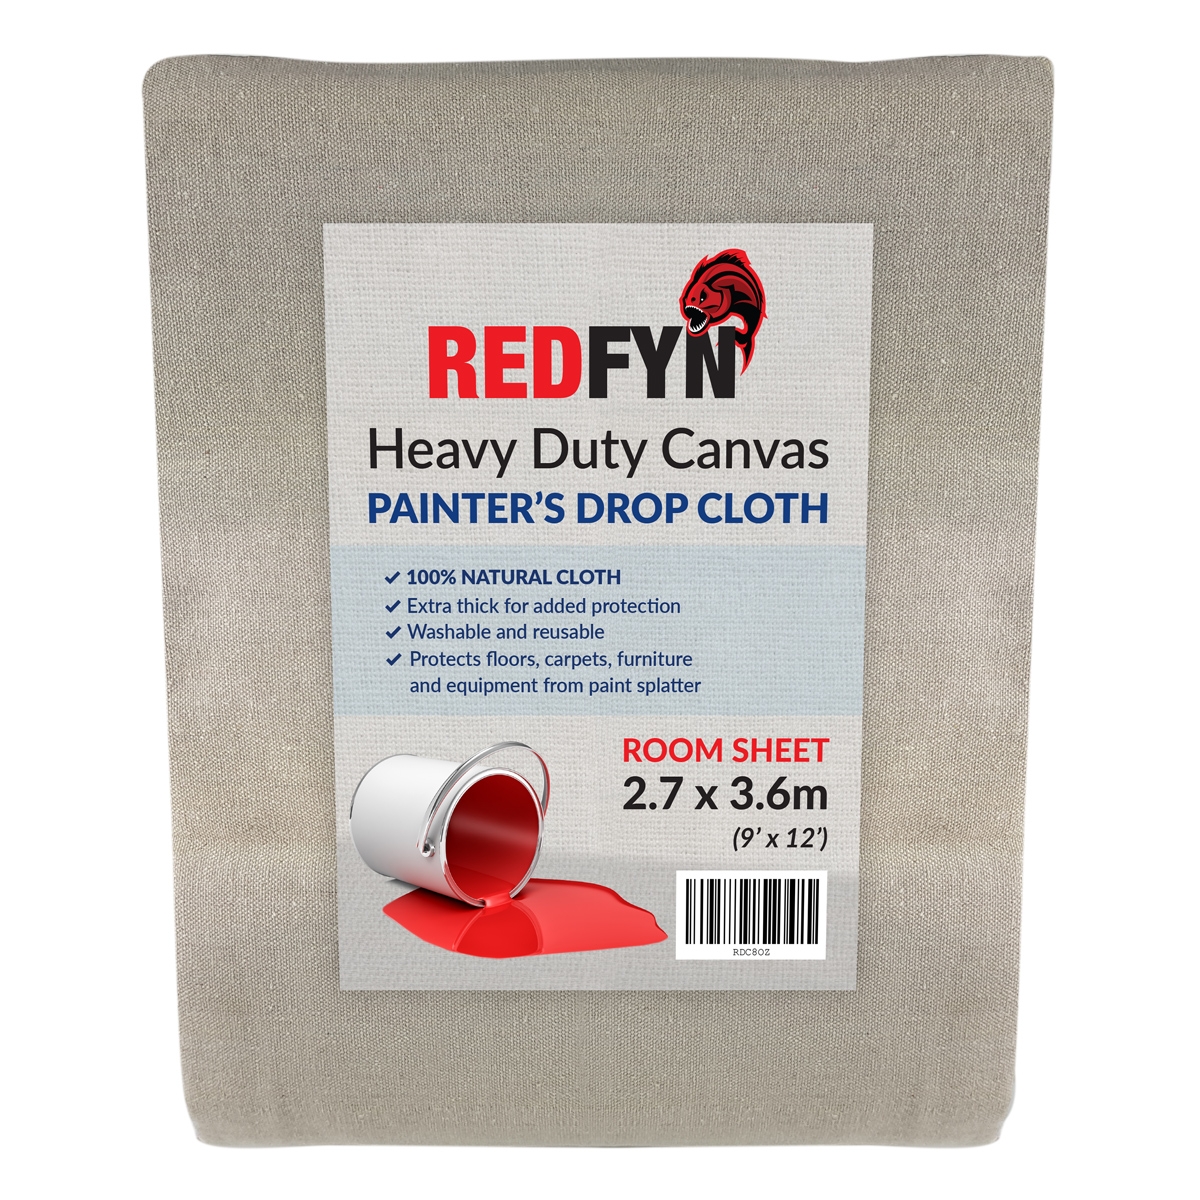 REDFYN Heavy Duty Painter's Drop Cloth 12' x 9' (3.6m x 2.7m)